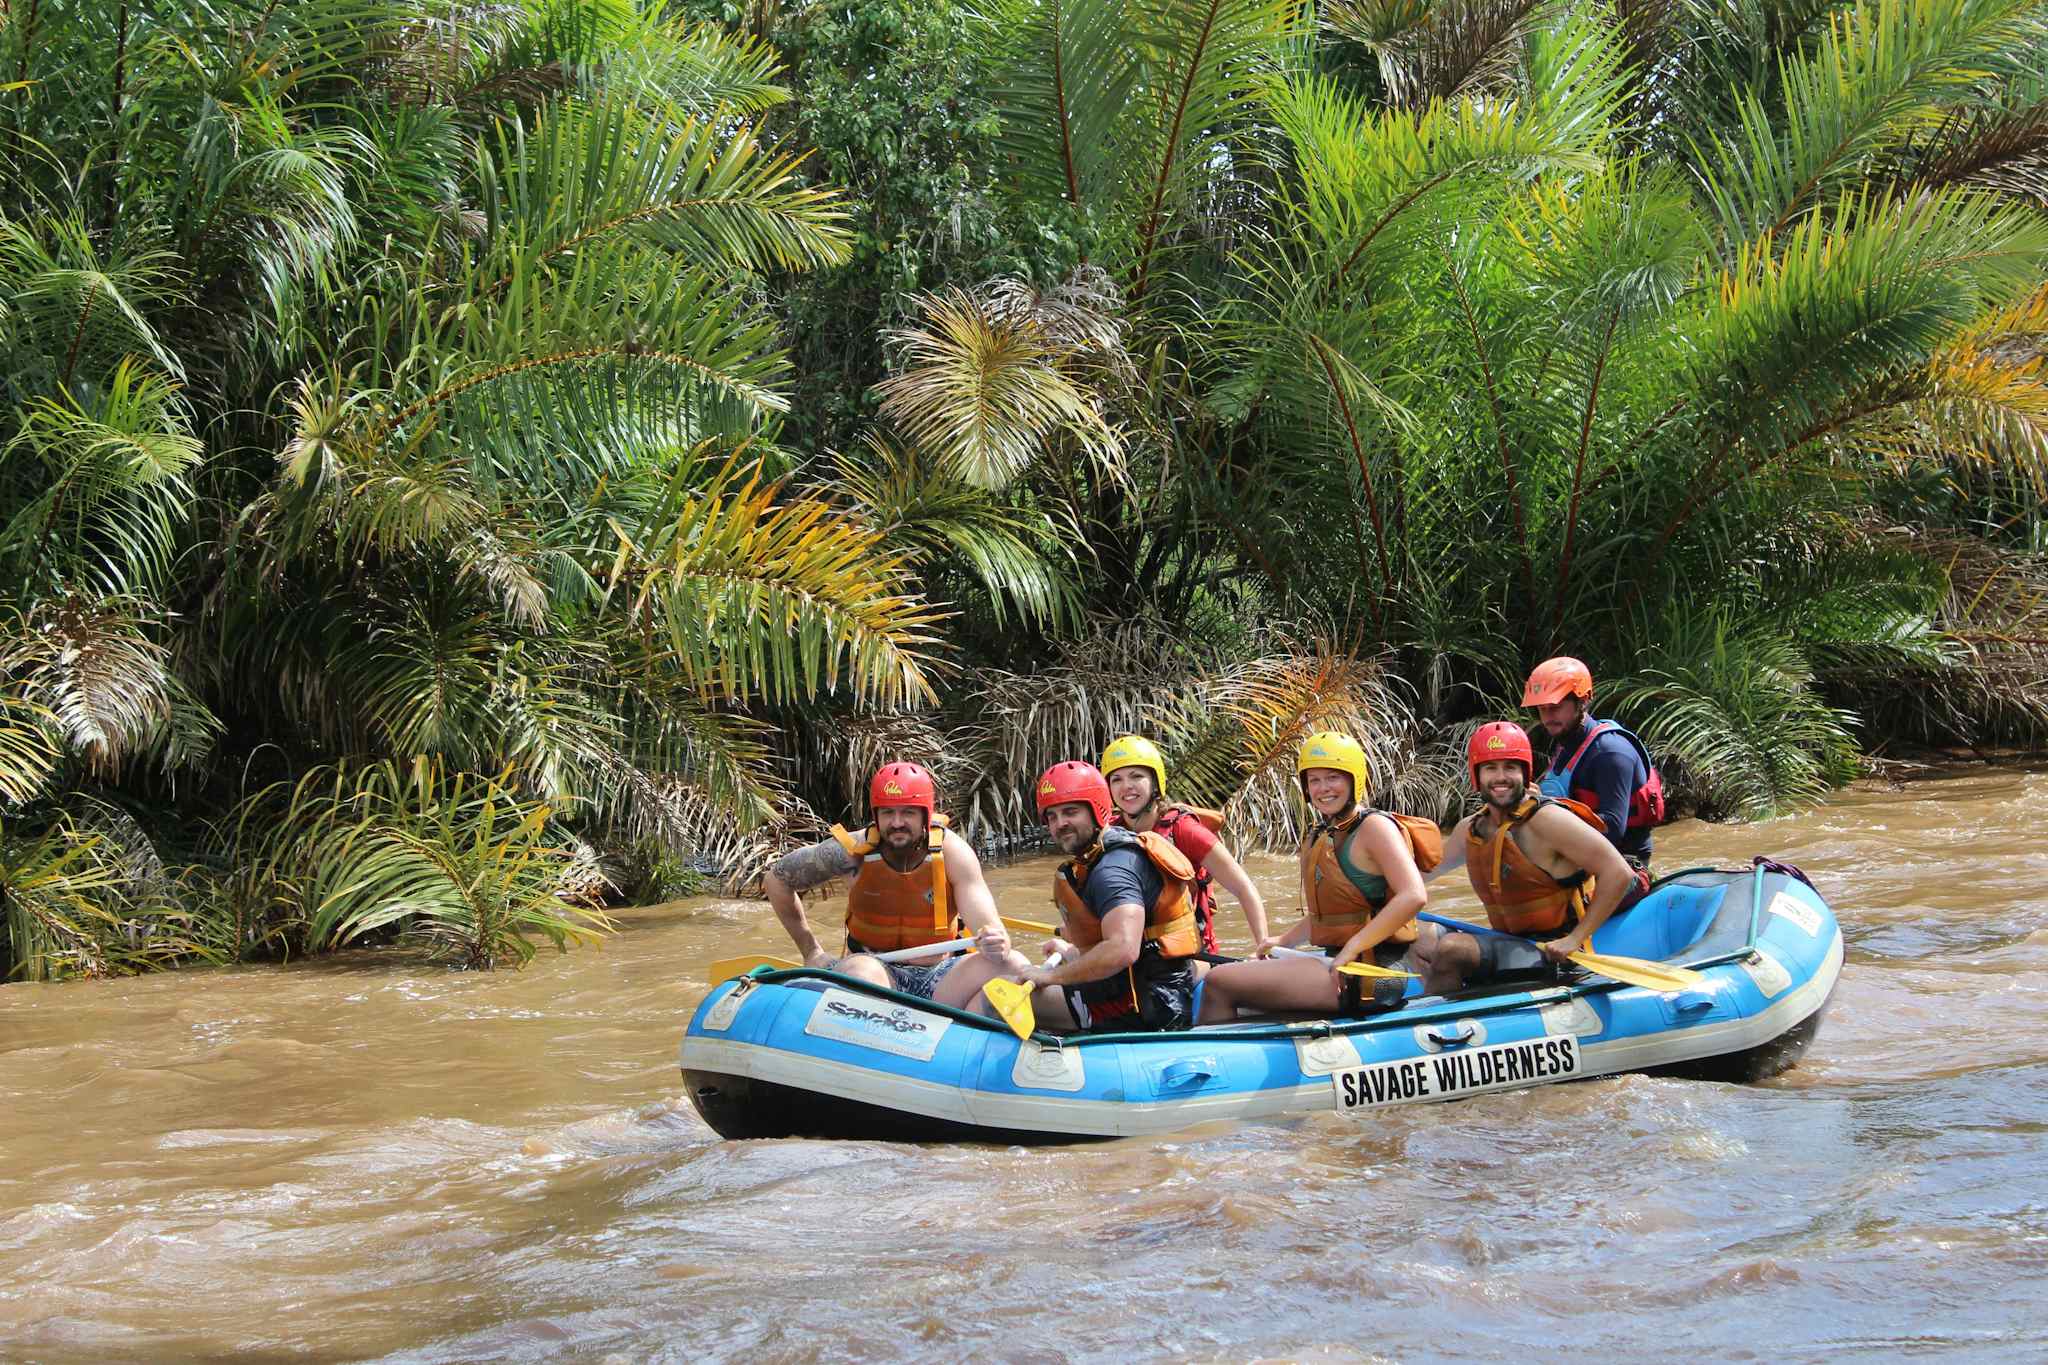 Rafting the Tana River in Kenya. Photo: Host/Savage Wilderness